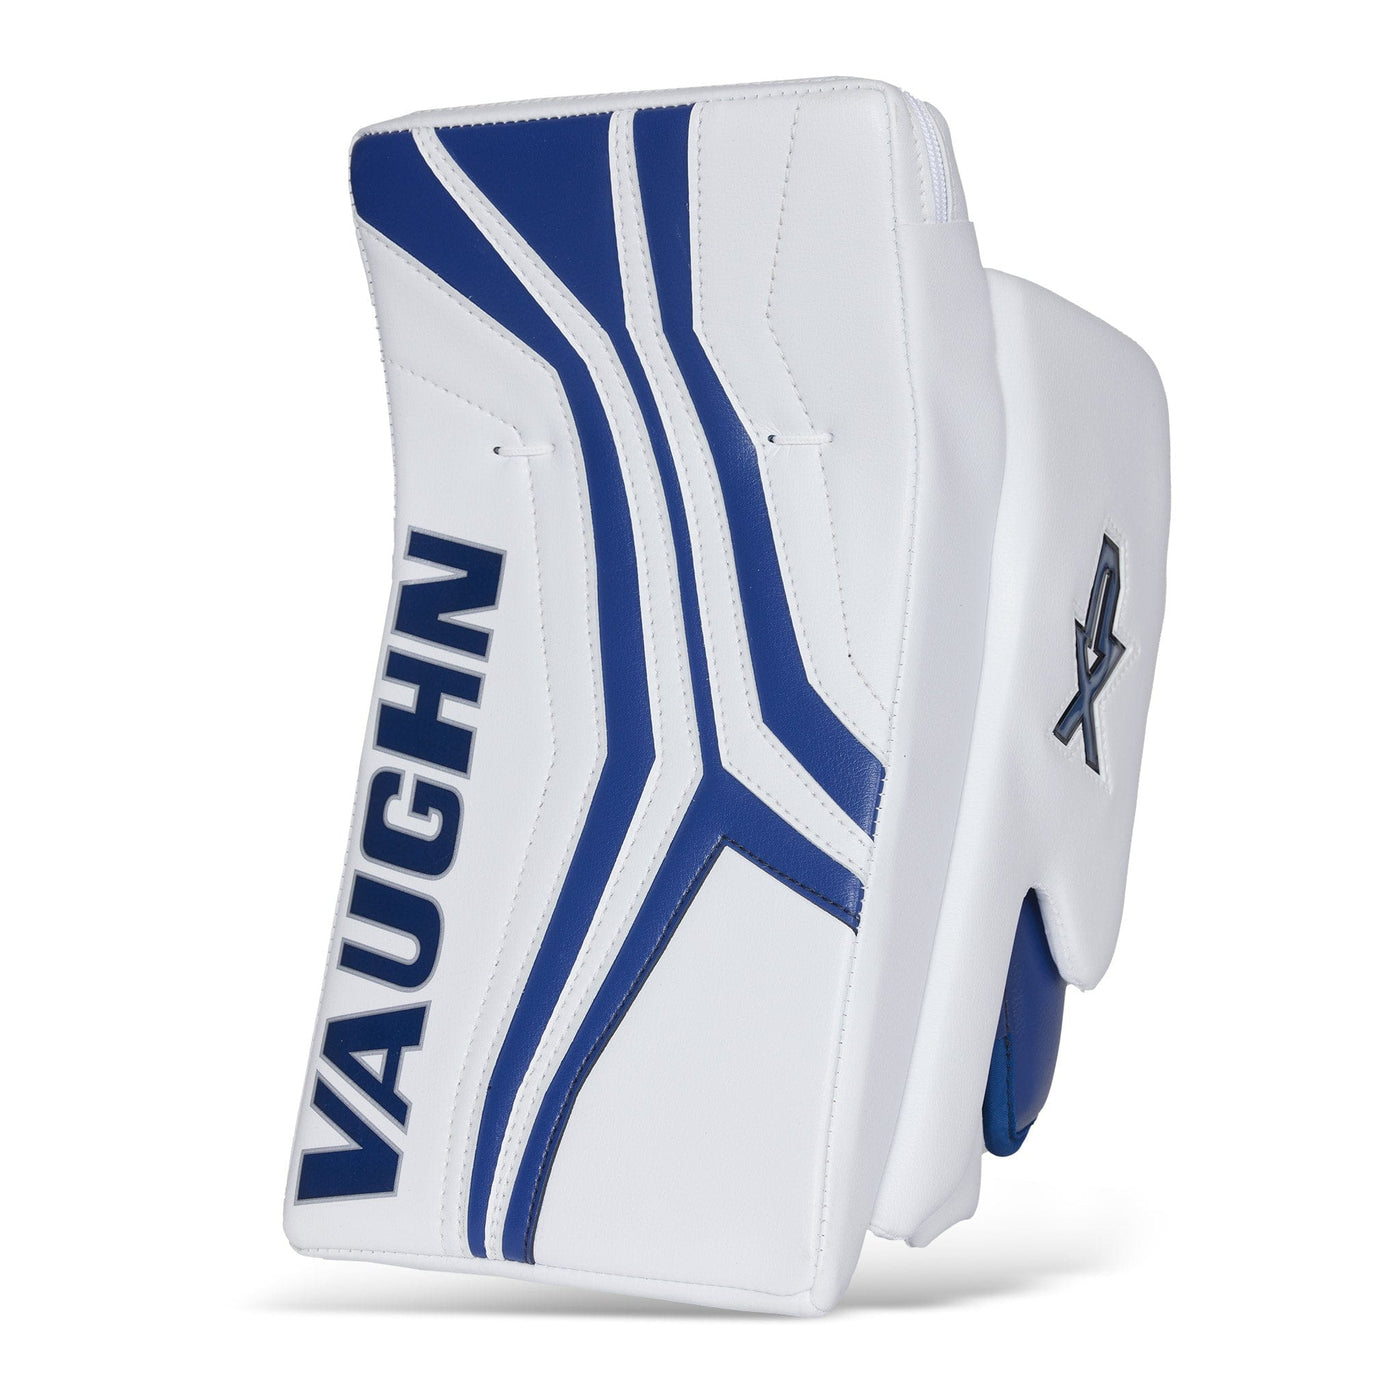 Vaughn Velocity V10 XP Pro Carbon Senior Goalie Blocker - TheHockeyShop.com